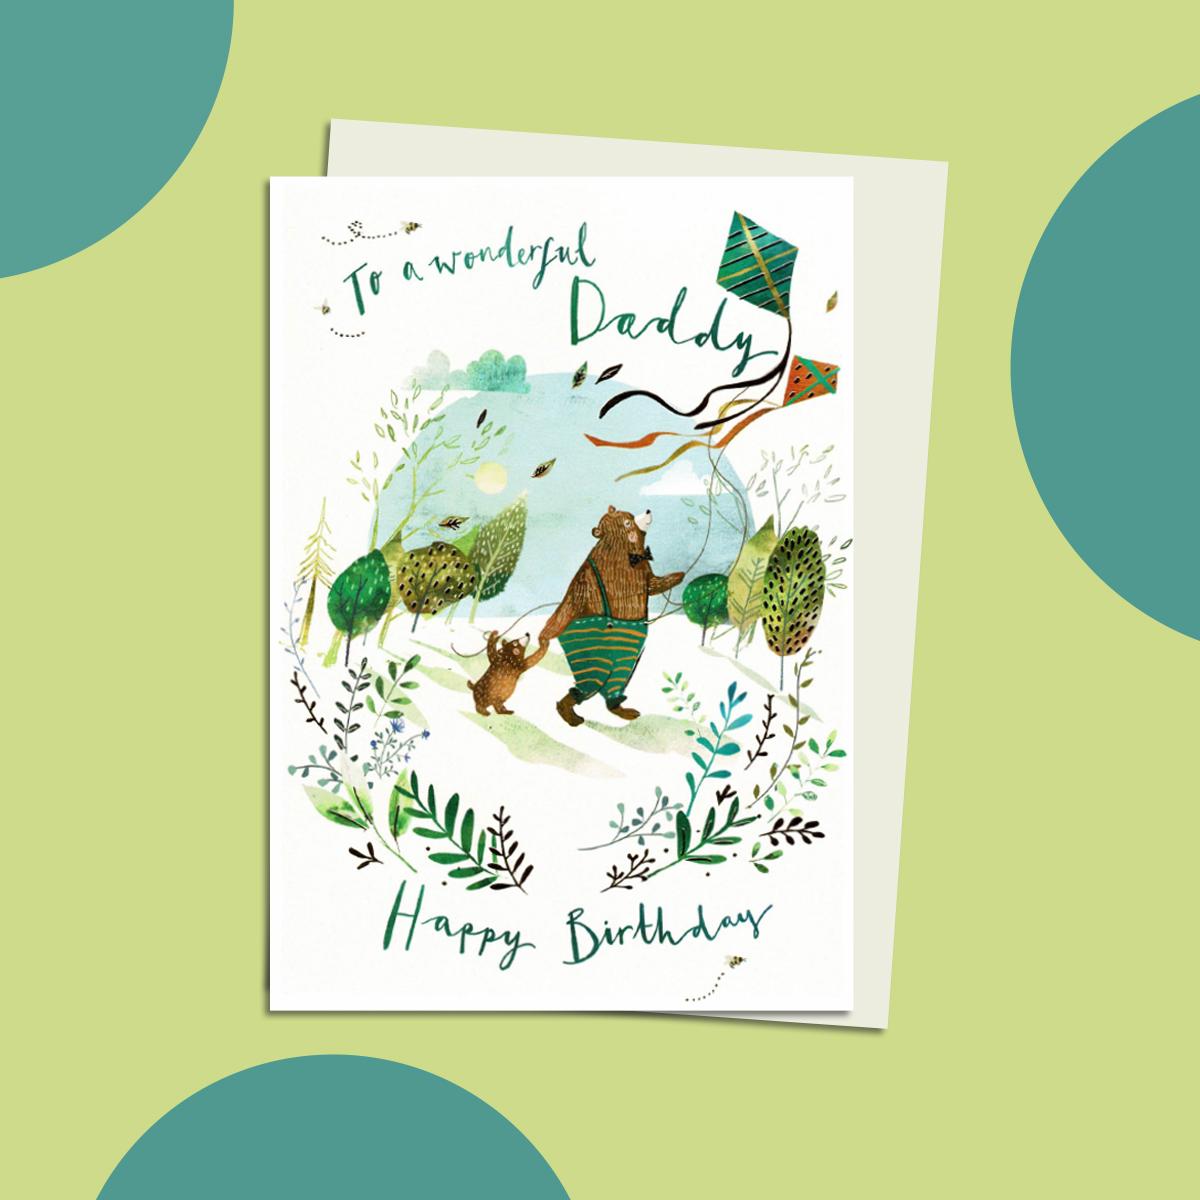 Wonderful Daddy Birthday Card Alongside Its Envelope